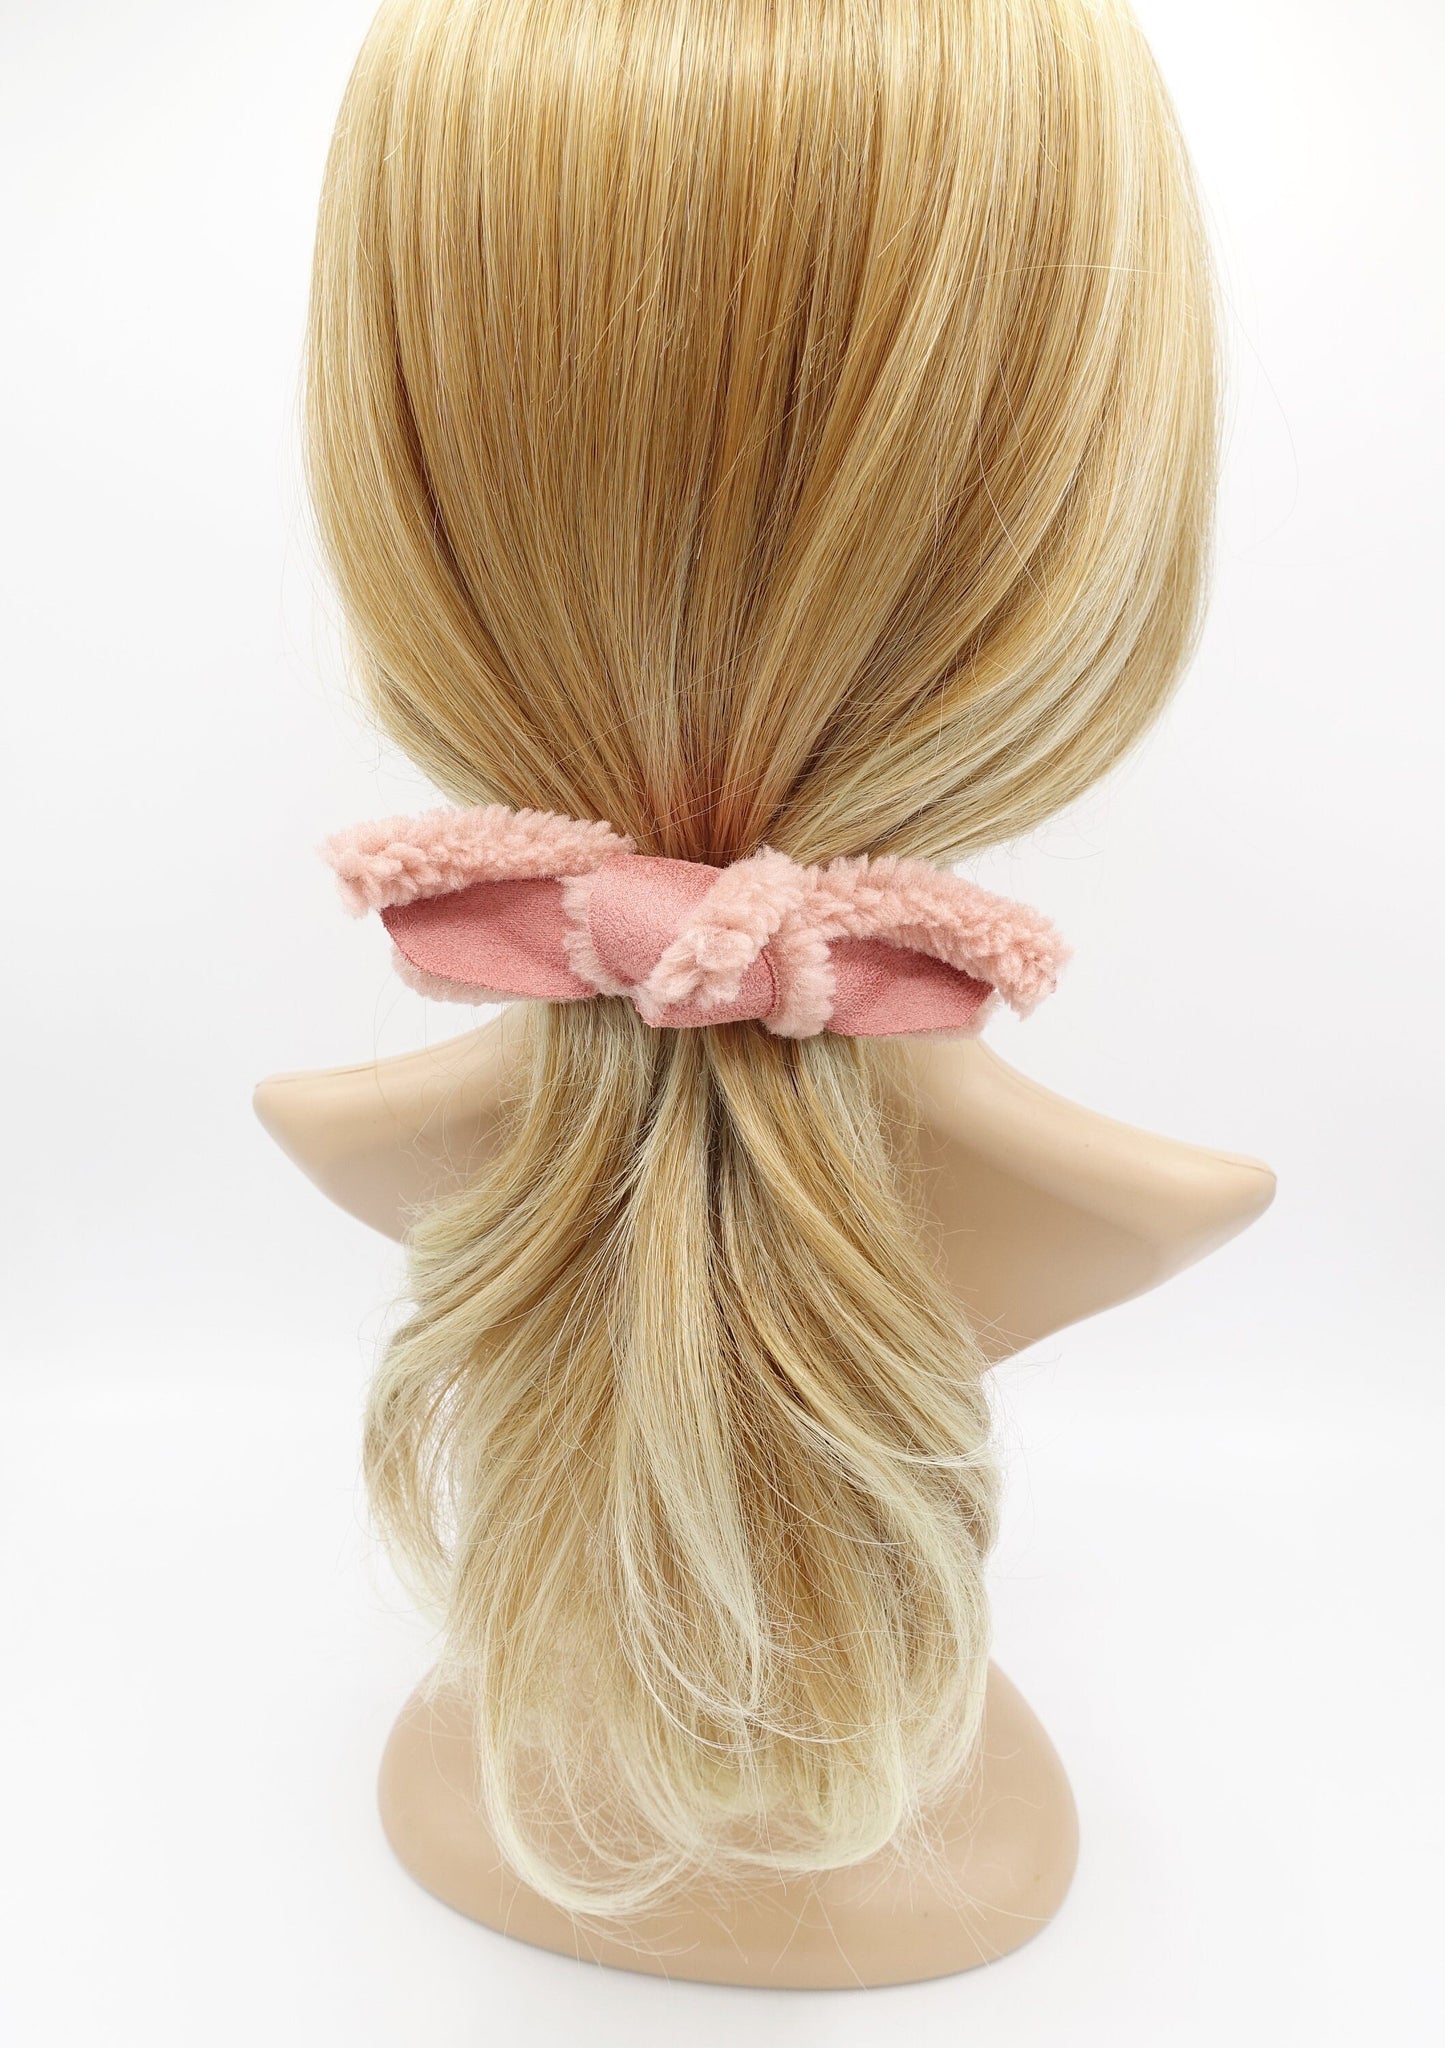 VeryShine sherpa hair bow leather teddy hair bow for women